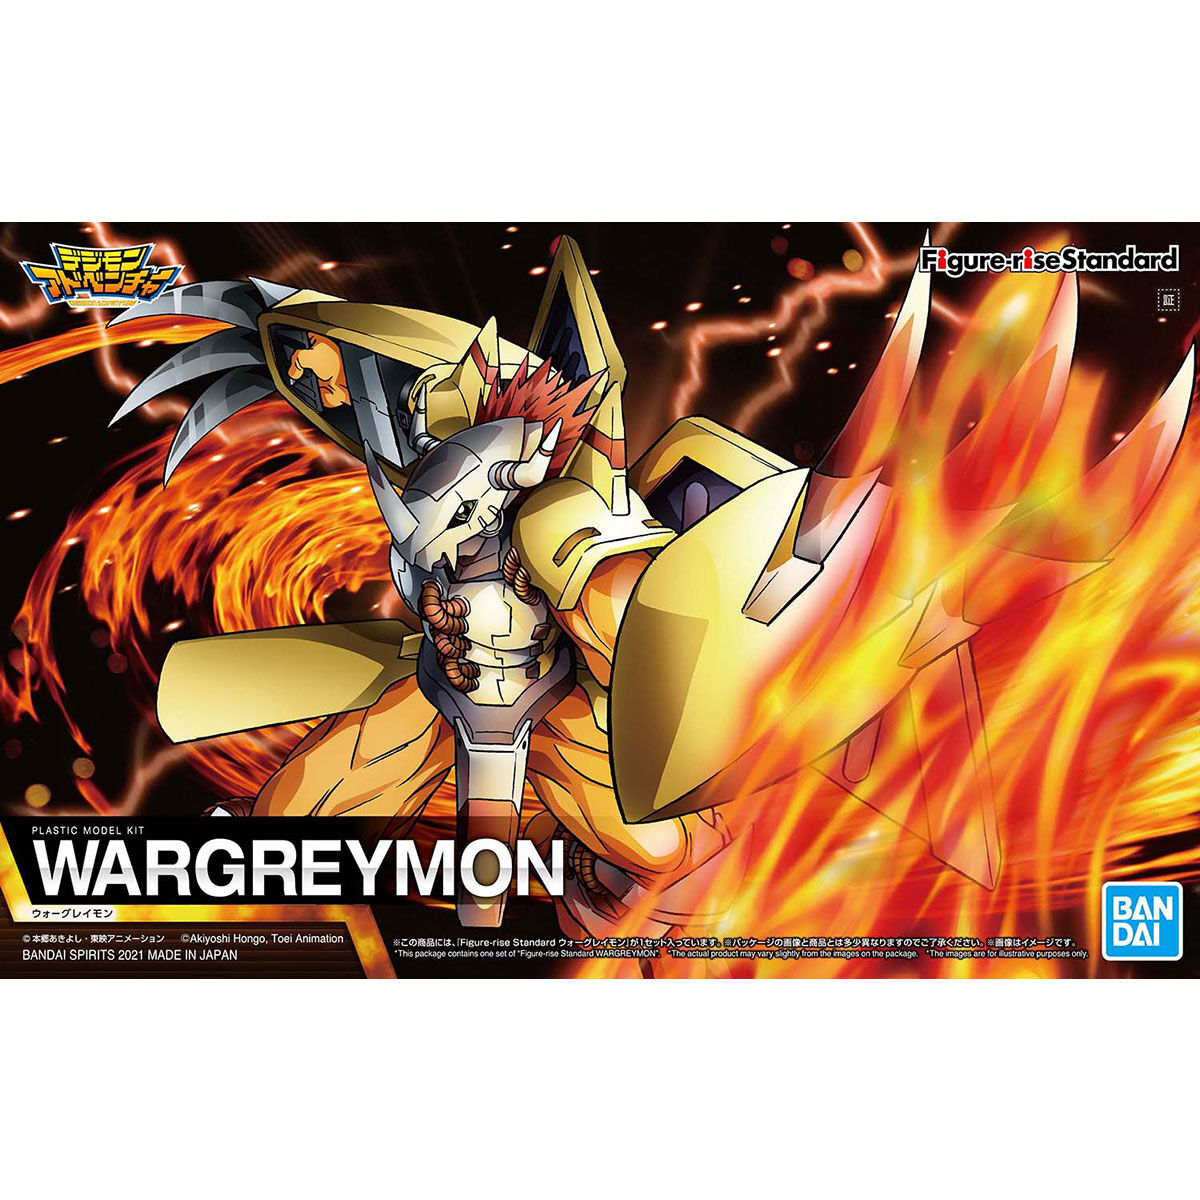 Digimon Figure-rise Standard Wargreymon